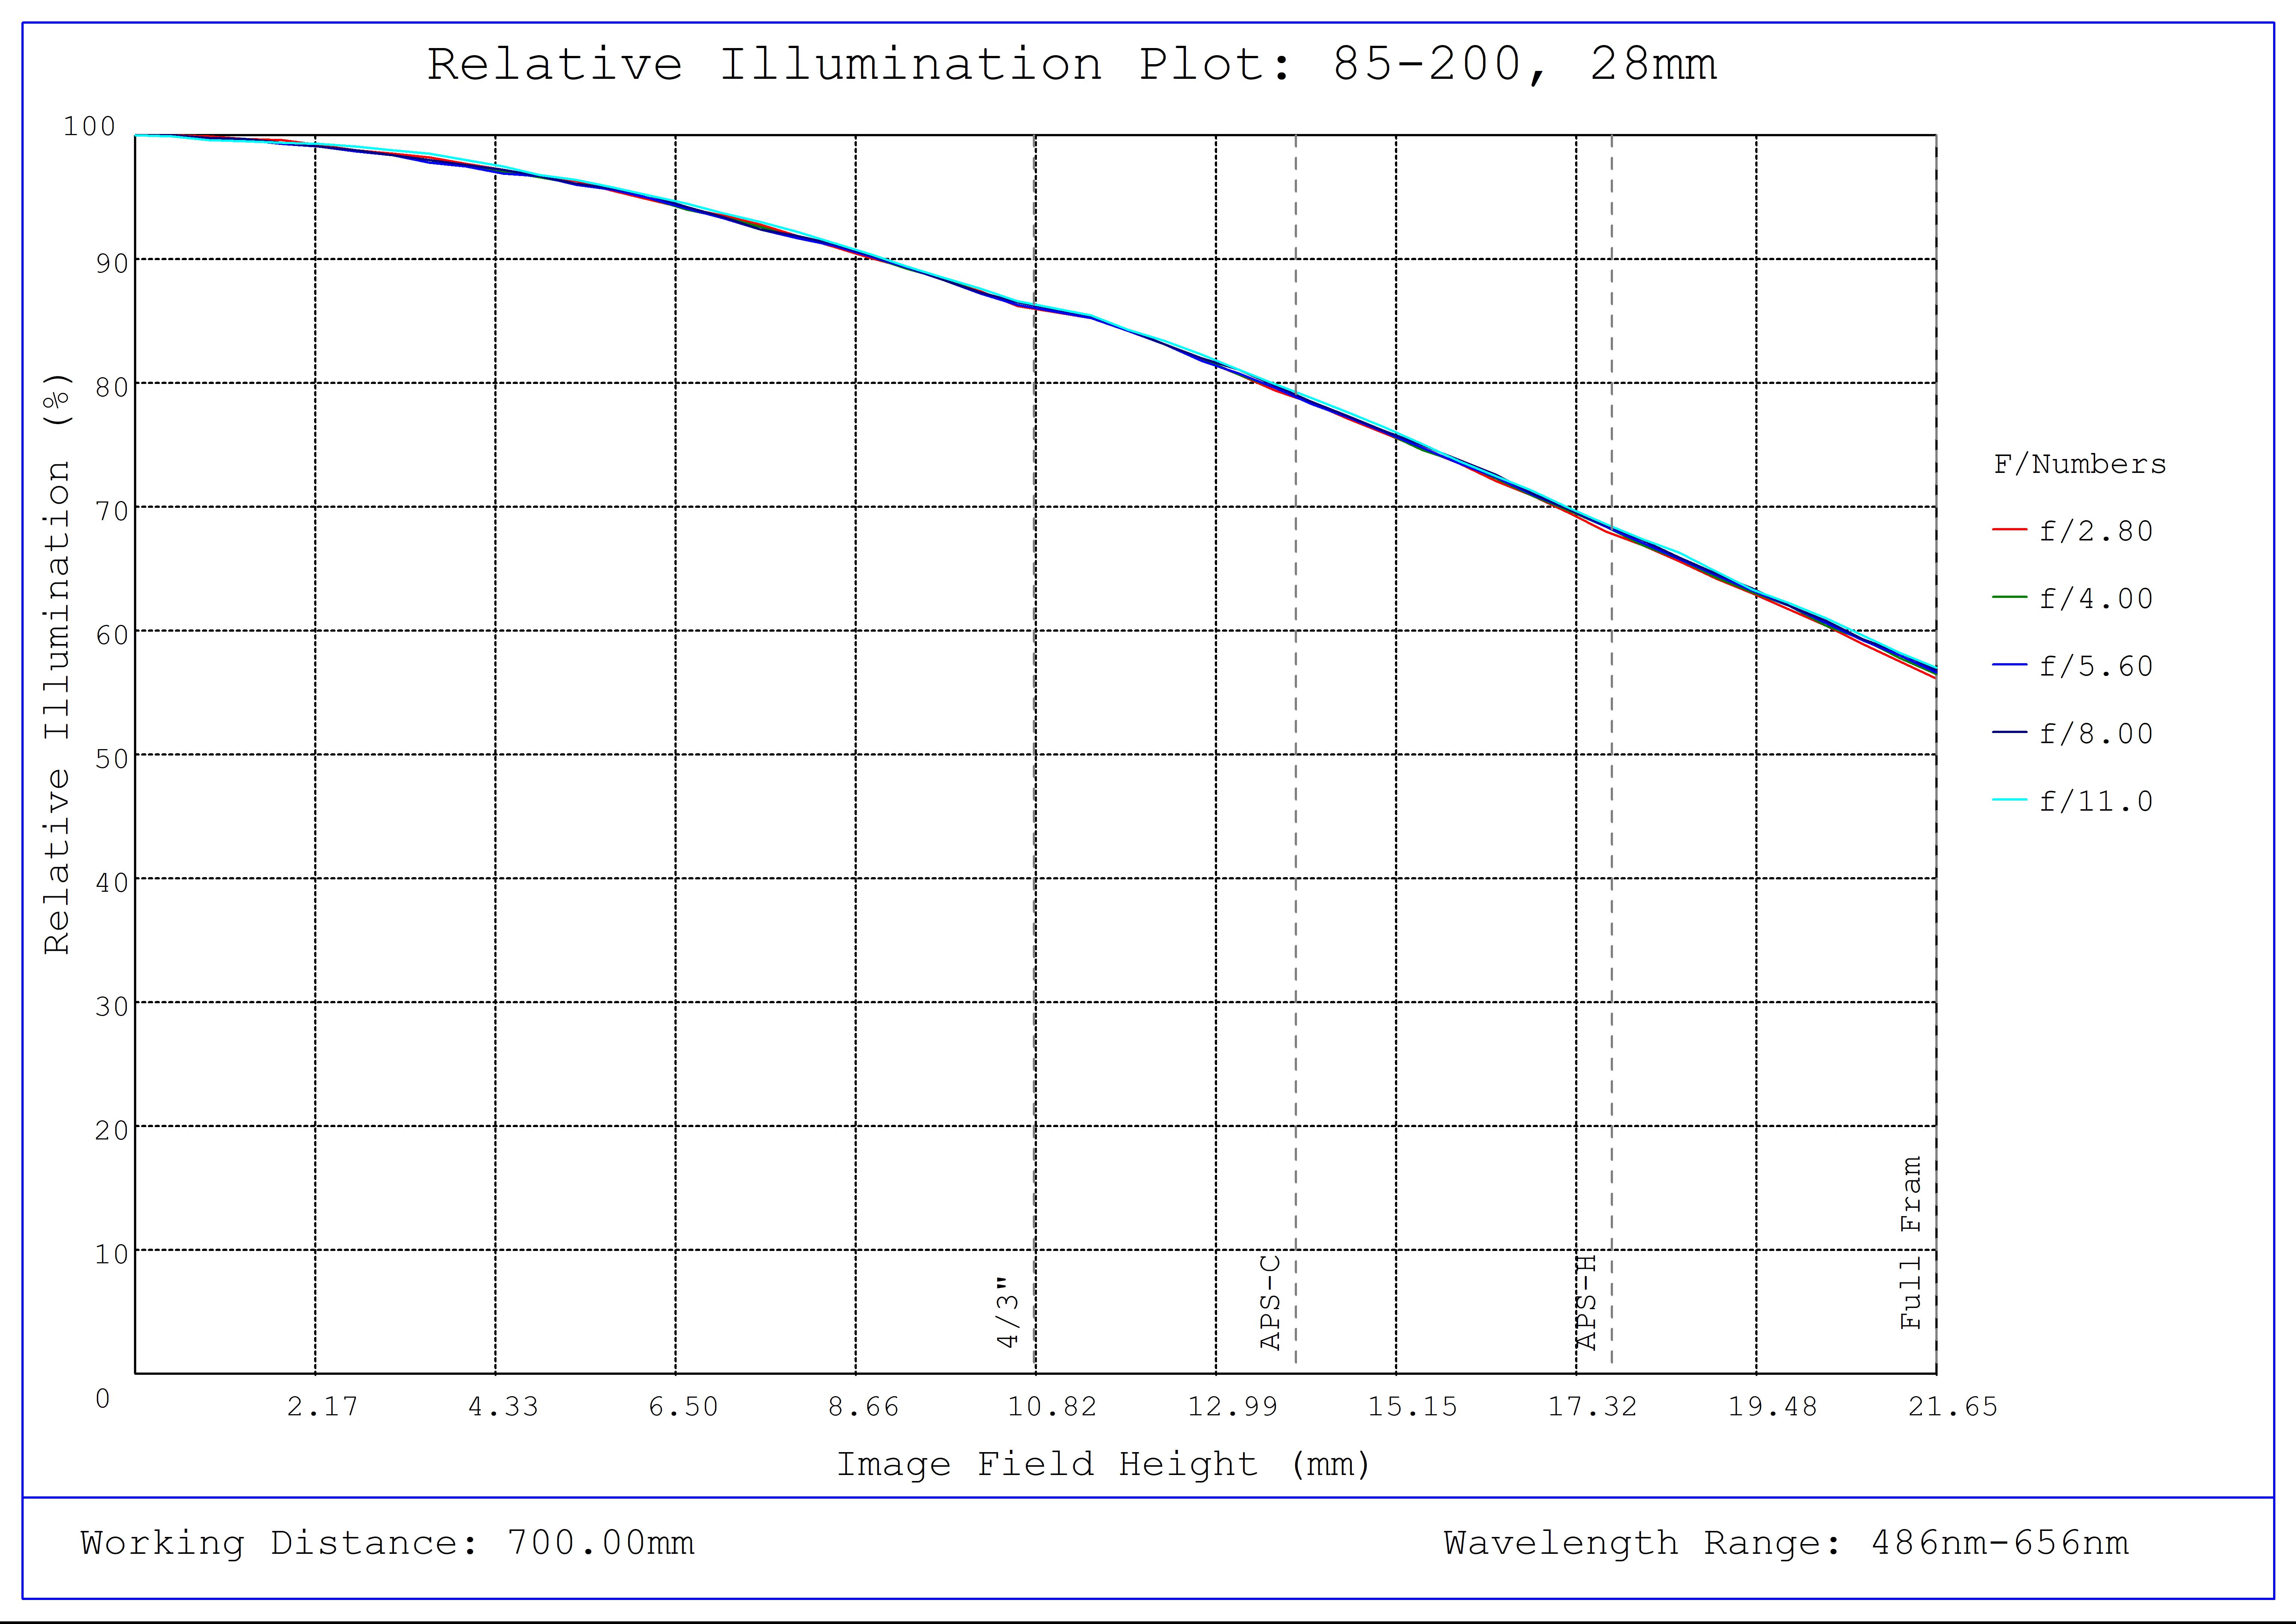 #85-200, 28mm Long Working Distance, LF Series Fixed Focal Length Lens, Relative Illumination Plot